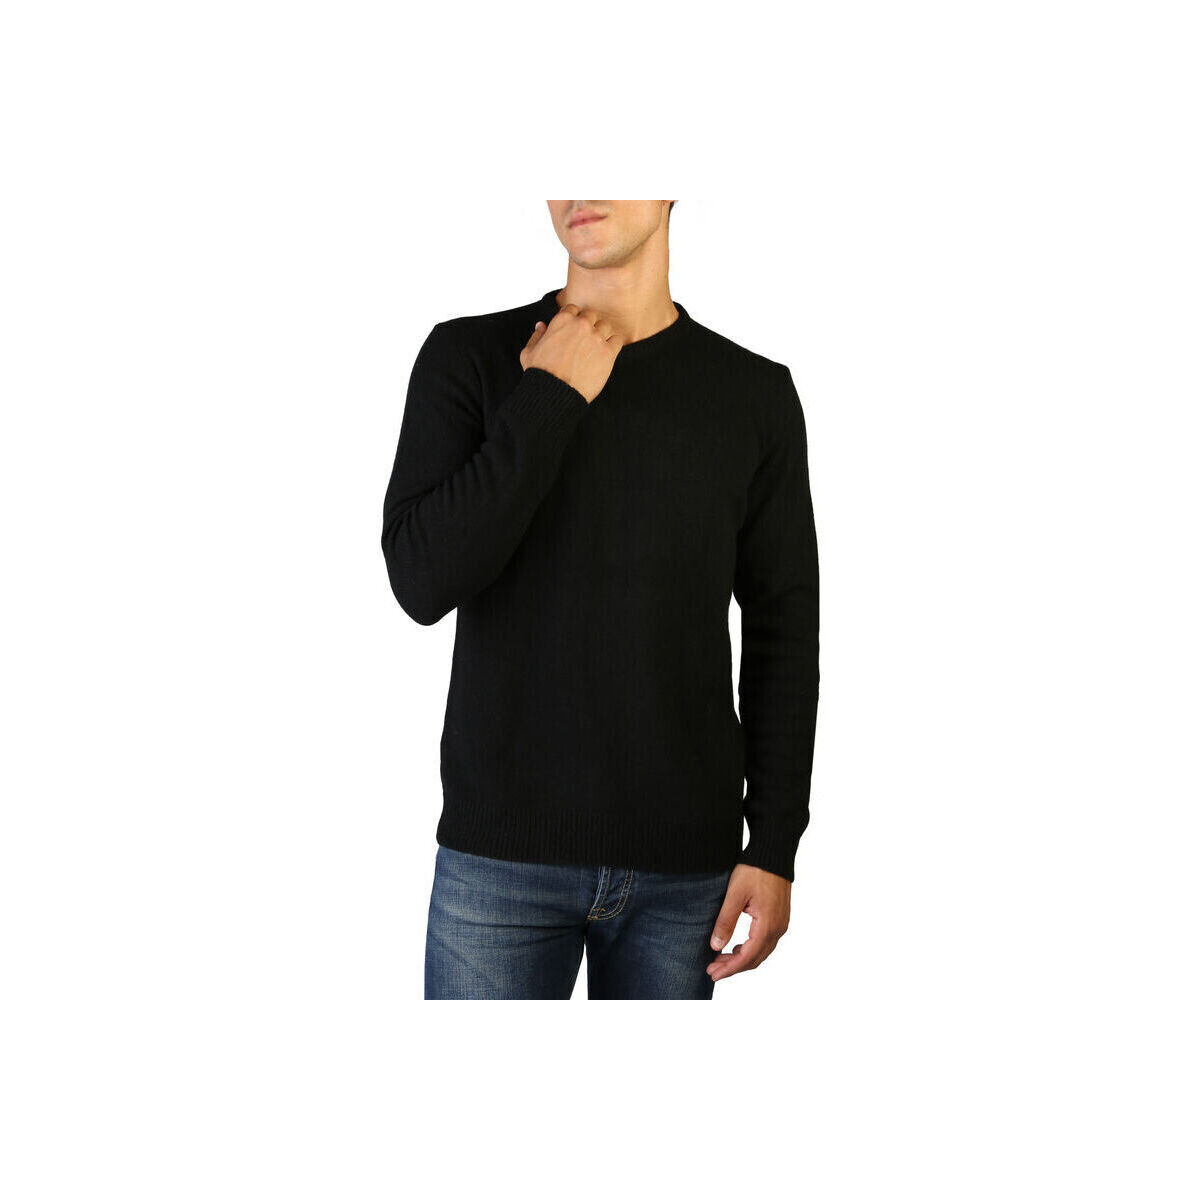 Oblačila Moški Puloverji 100% Cashmere Jersey Črna